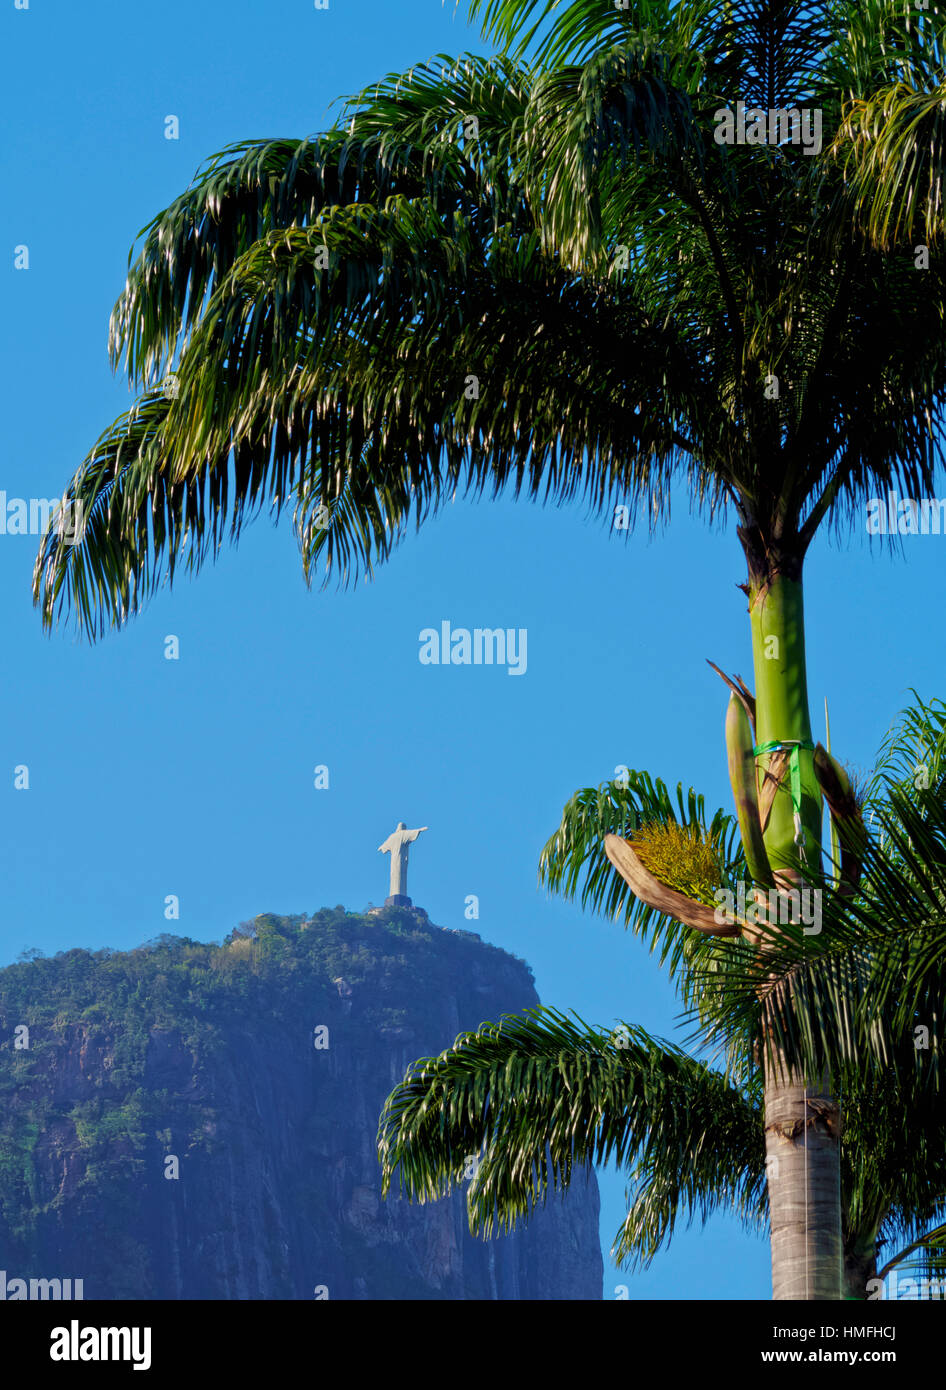 Corcovado and Christ statue viewed through the palm trees of the Botanical Garden, Zona Sul, Rio de Janeiro, Brazil Stock Photo